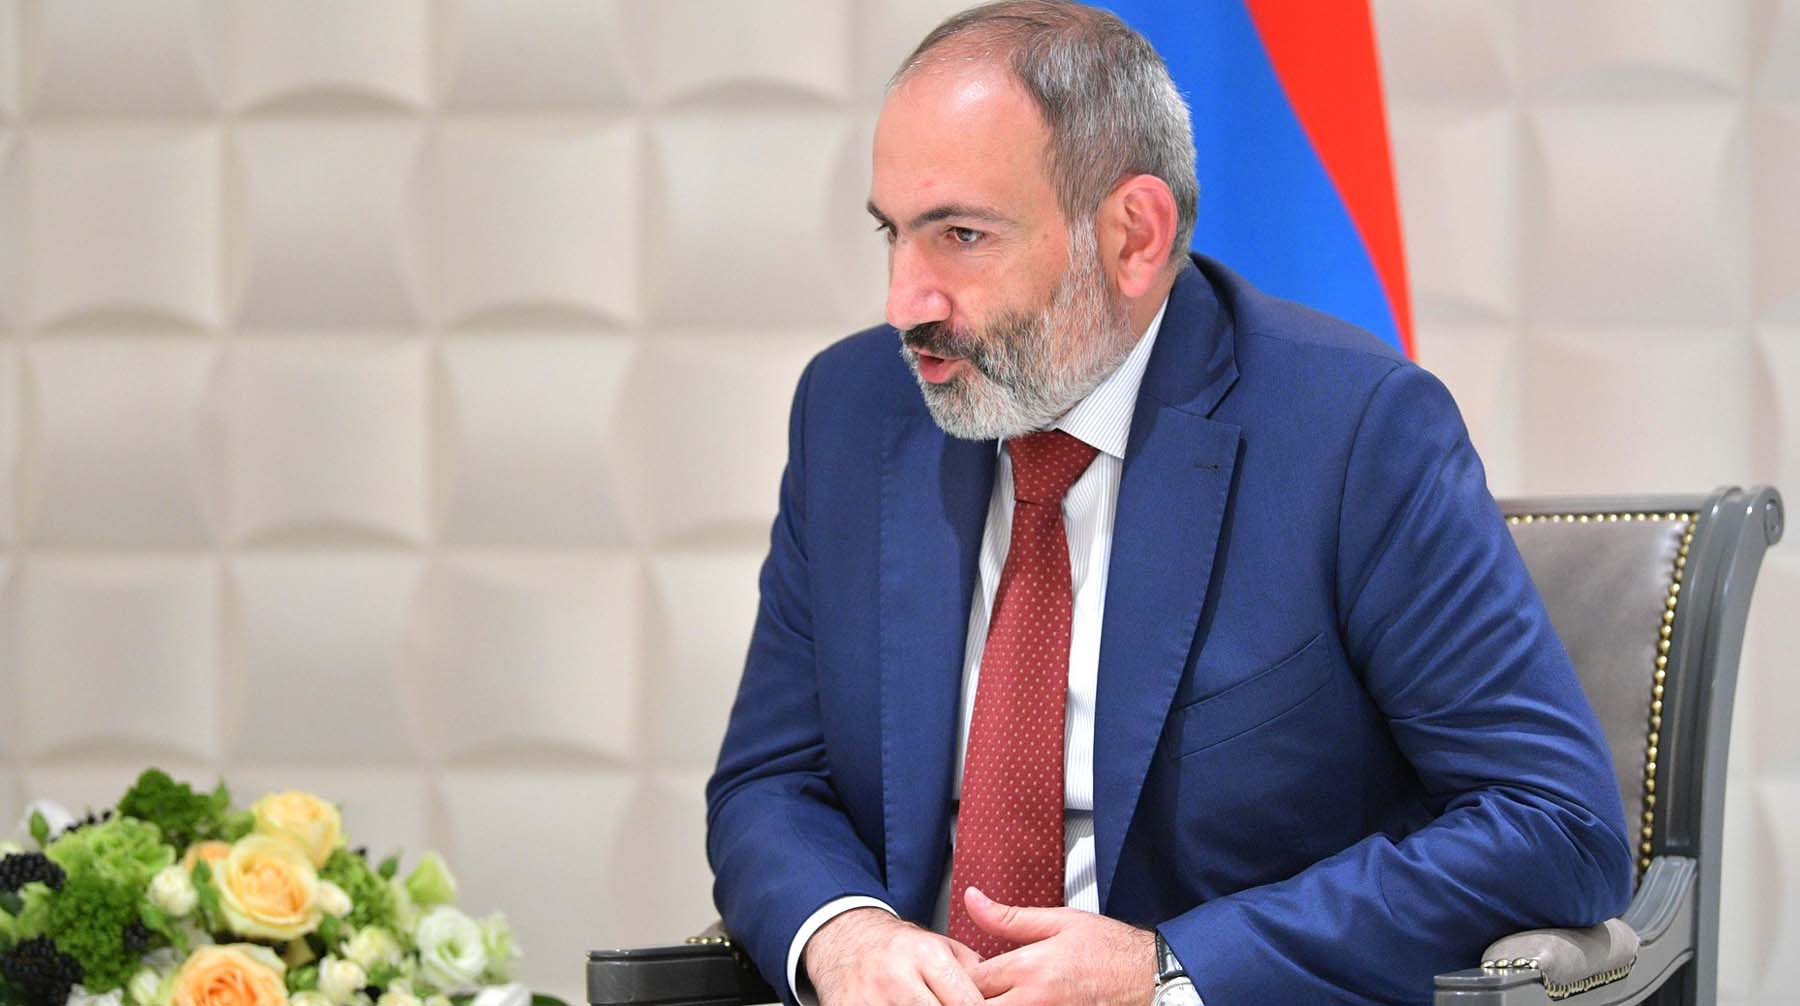 Представлять Армению на мероприятии не будет никто Фото: © Global Look Press / Kremlin Pool